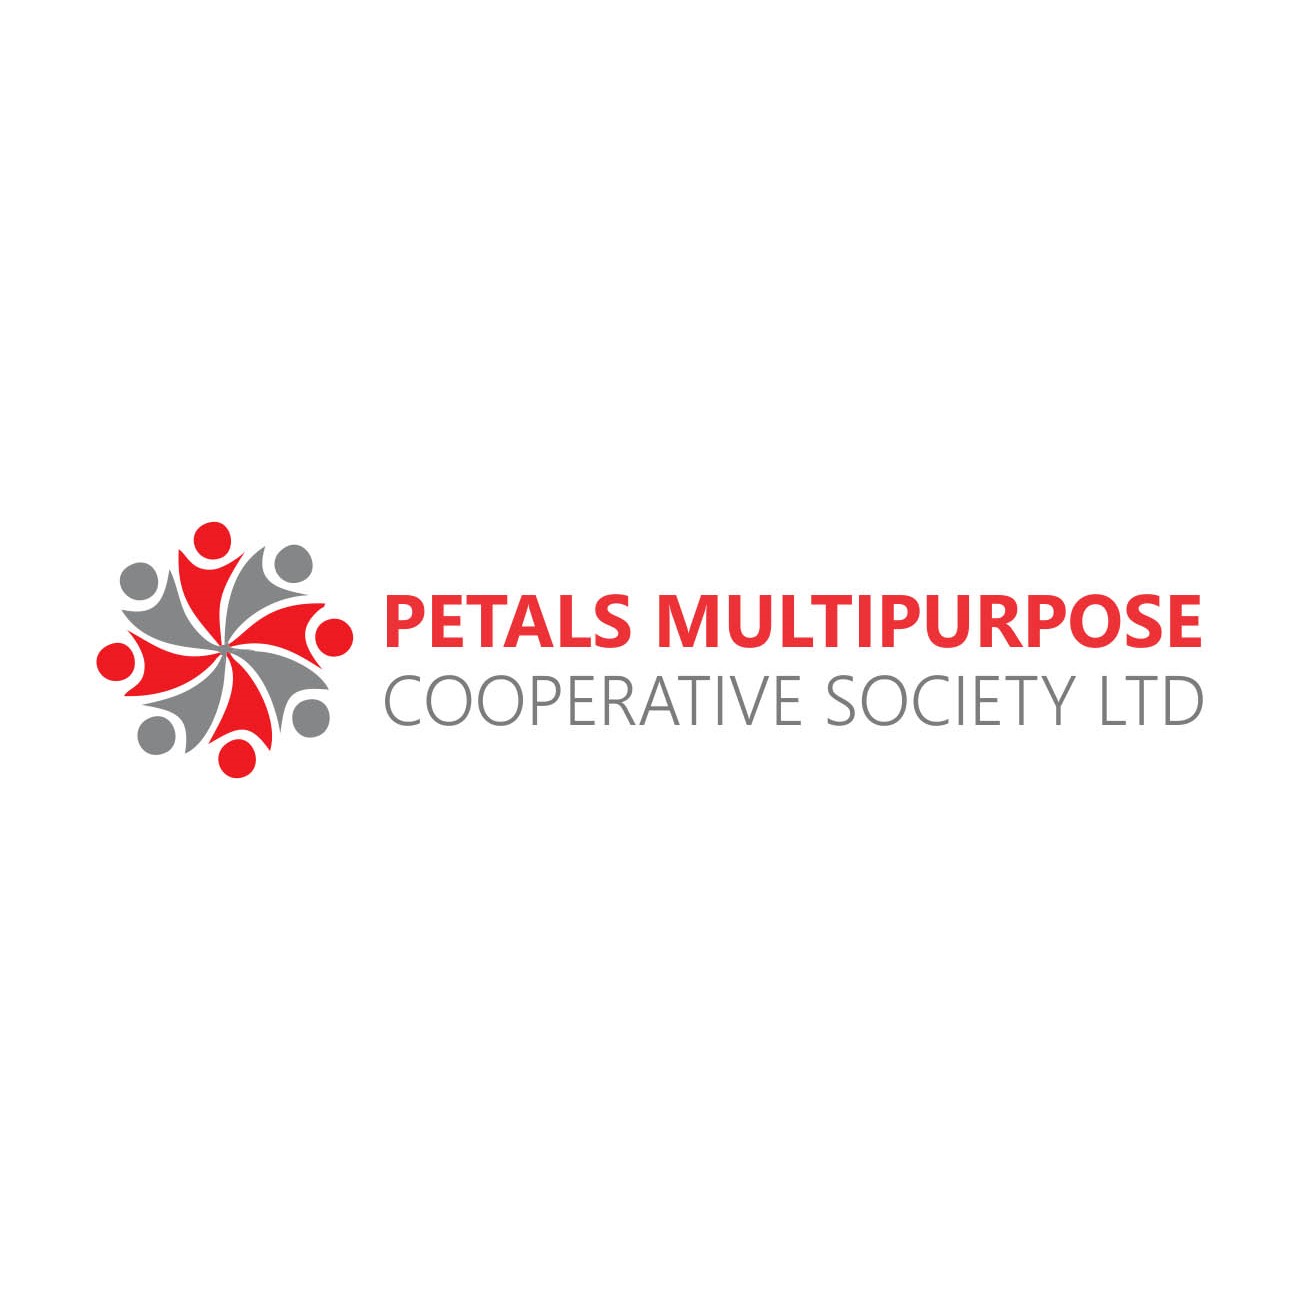 Petals Multipurpose Cooperative Society